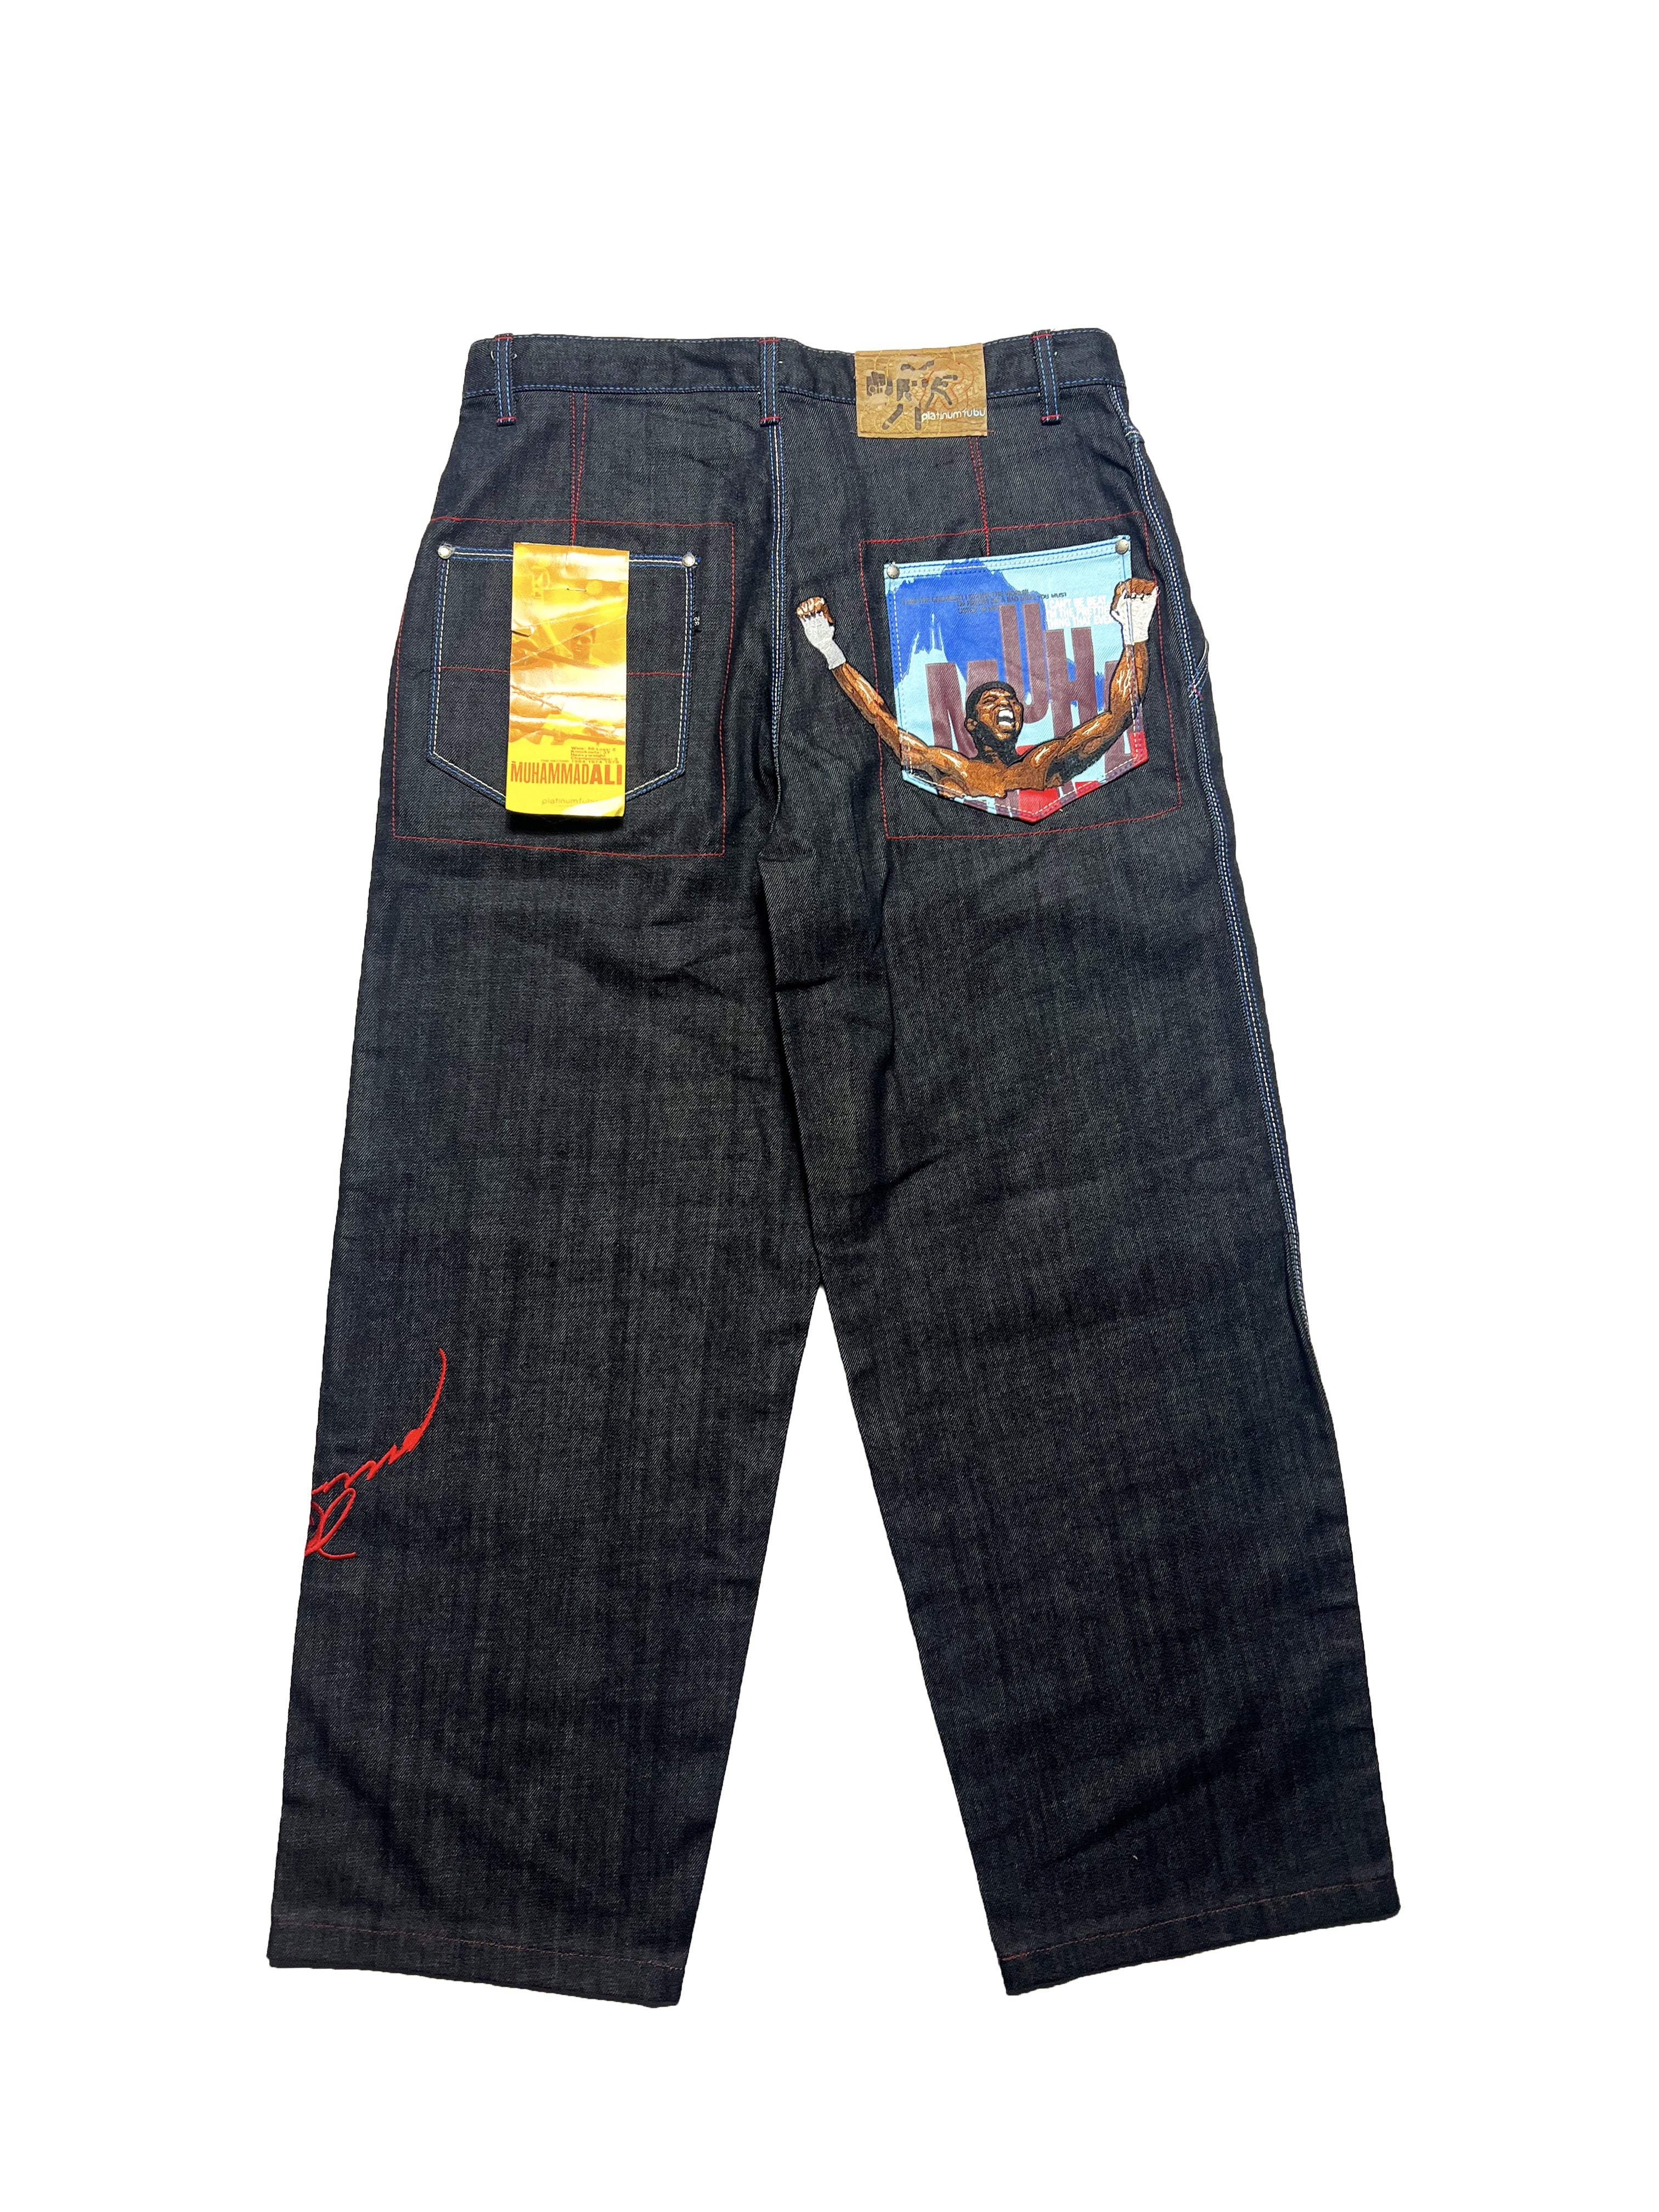 Fubu Muhammed Ali Jeans BNWT 90's